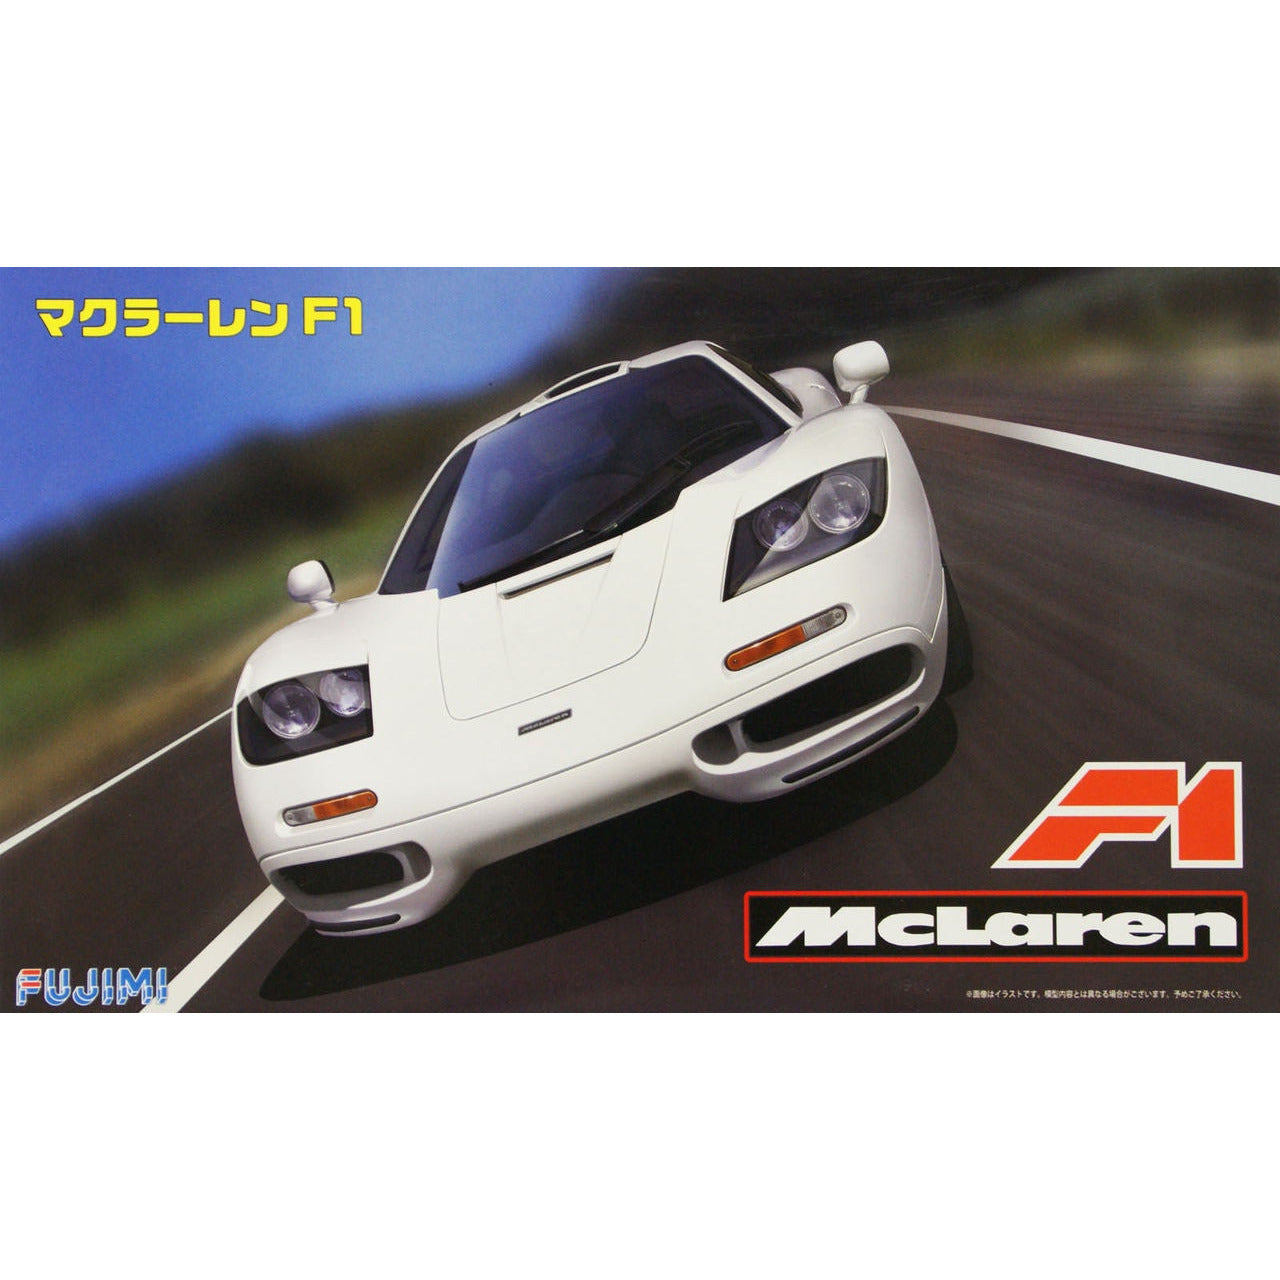 RS-66 McLaren F1 1/24 #125732 by Fujimi